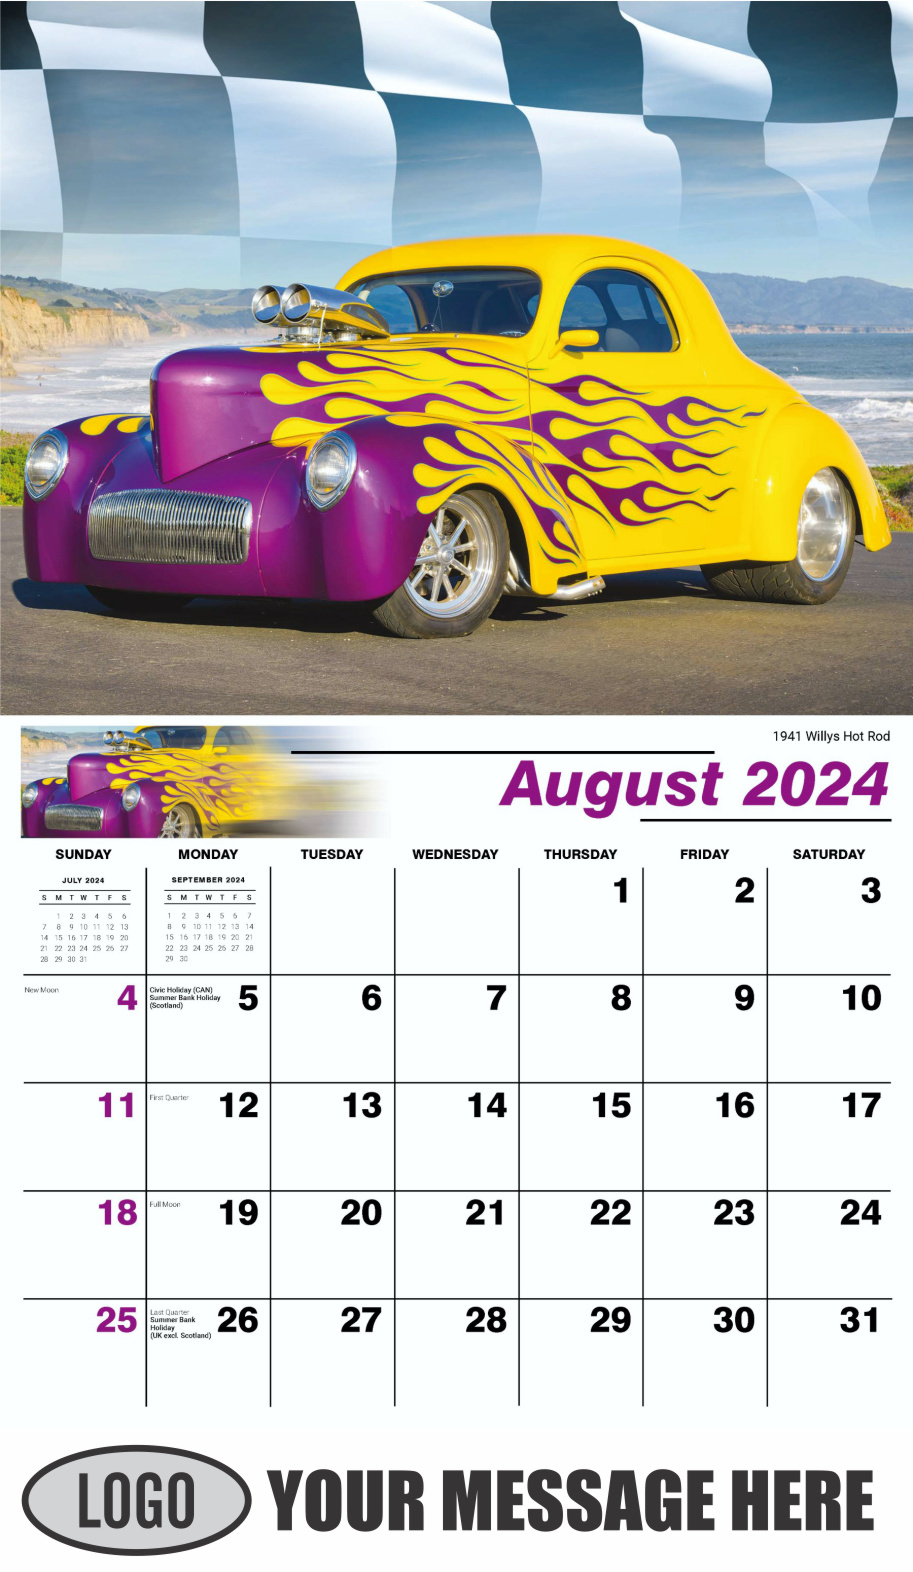 Road Warriors 2024 Automotive Business Promo Wall Calendar - August